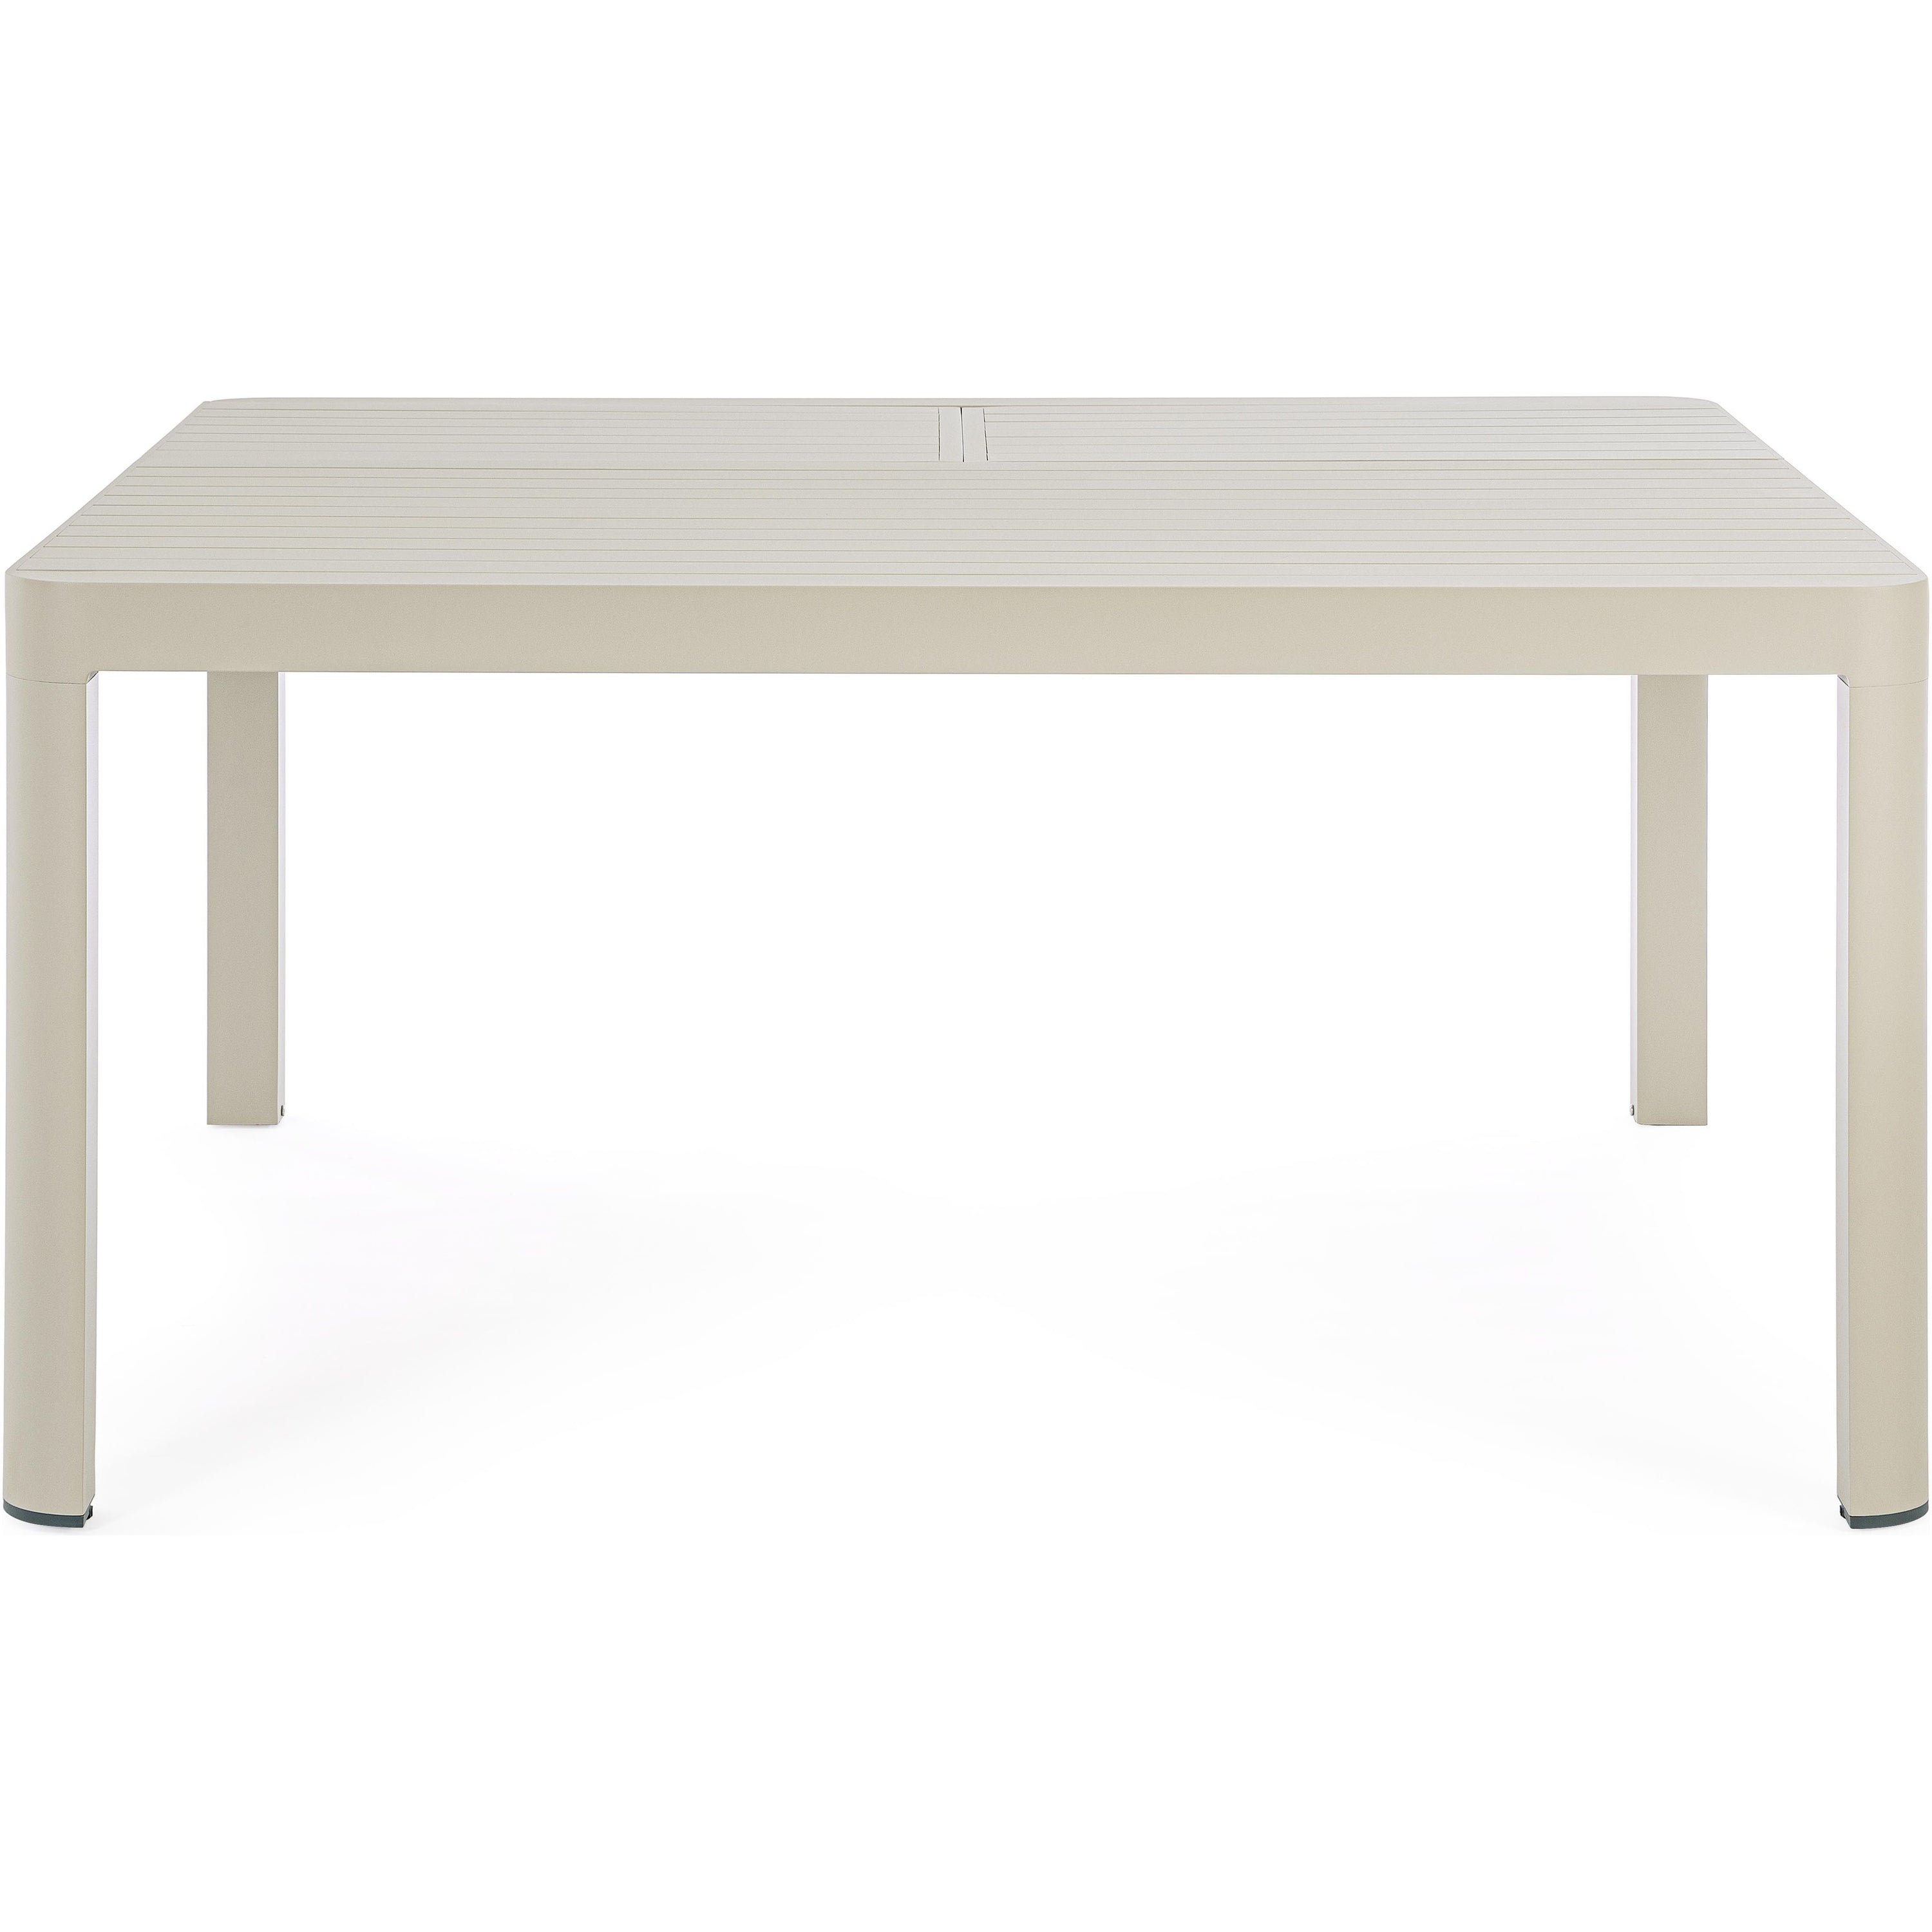 KIPLIN prasiilginantis lauko valgomojo stalas, 149-97x149cm, smėlio spalva